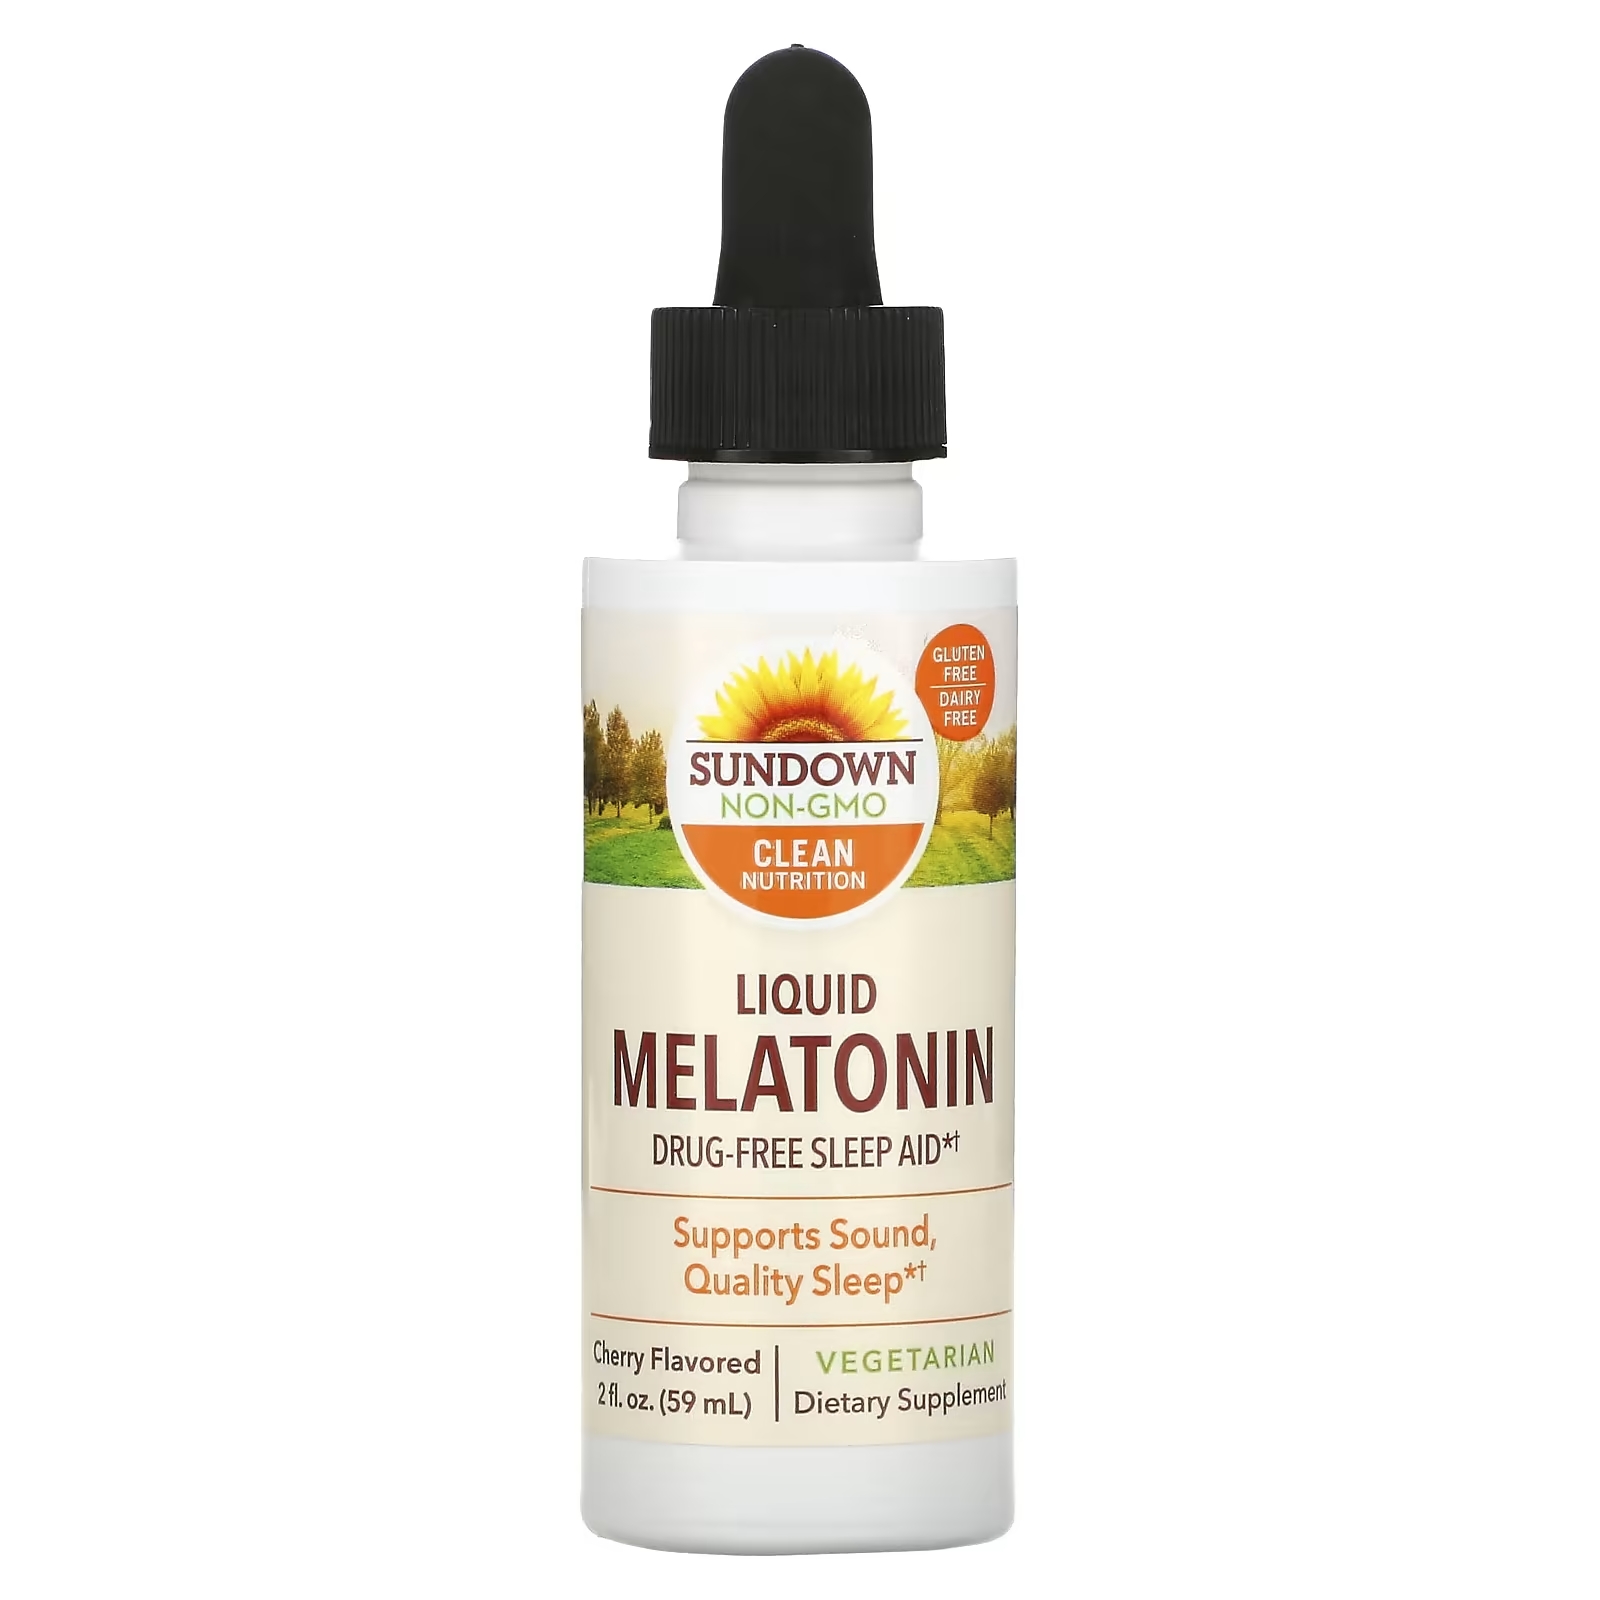 Жидкий Мелатонин Sundown Naturals со вкусом вишни sundown naturals жидкий мелатонин со вкусом вишни 2 ж унц 59 мл